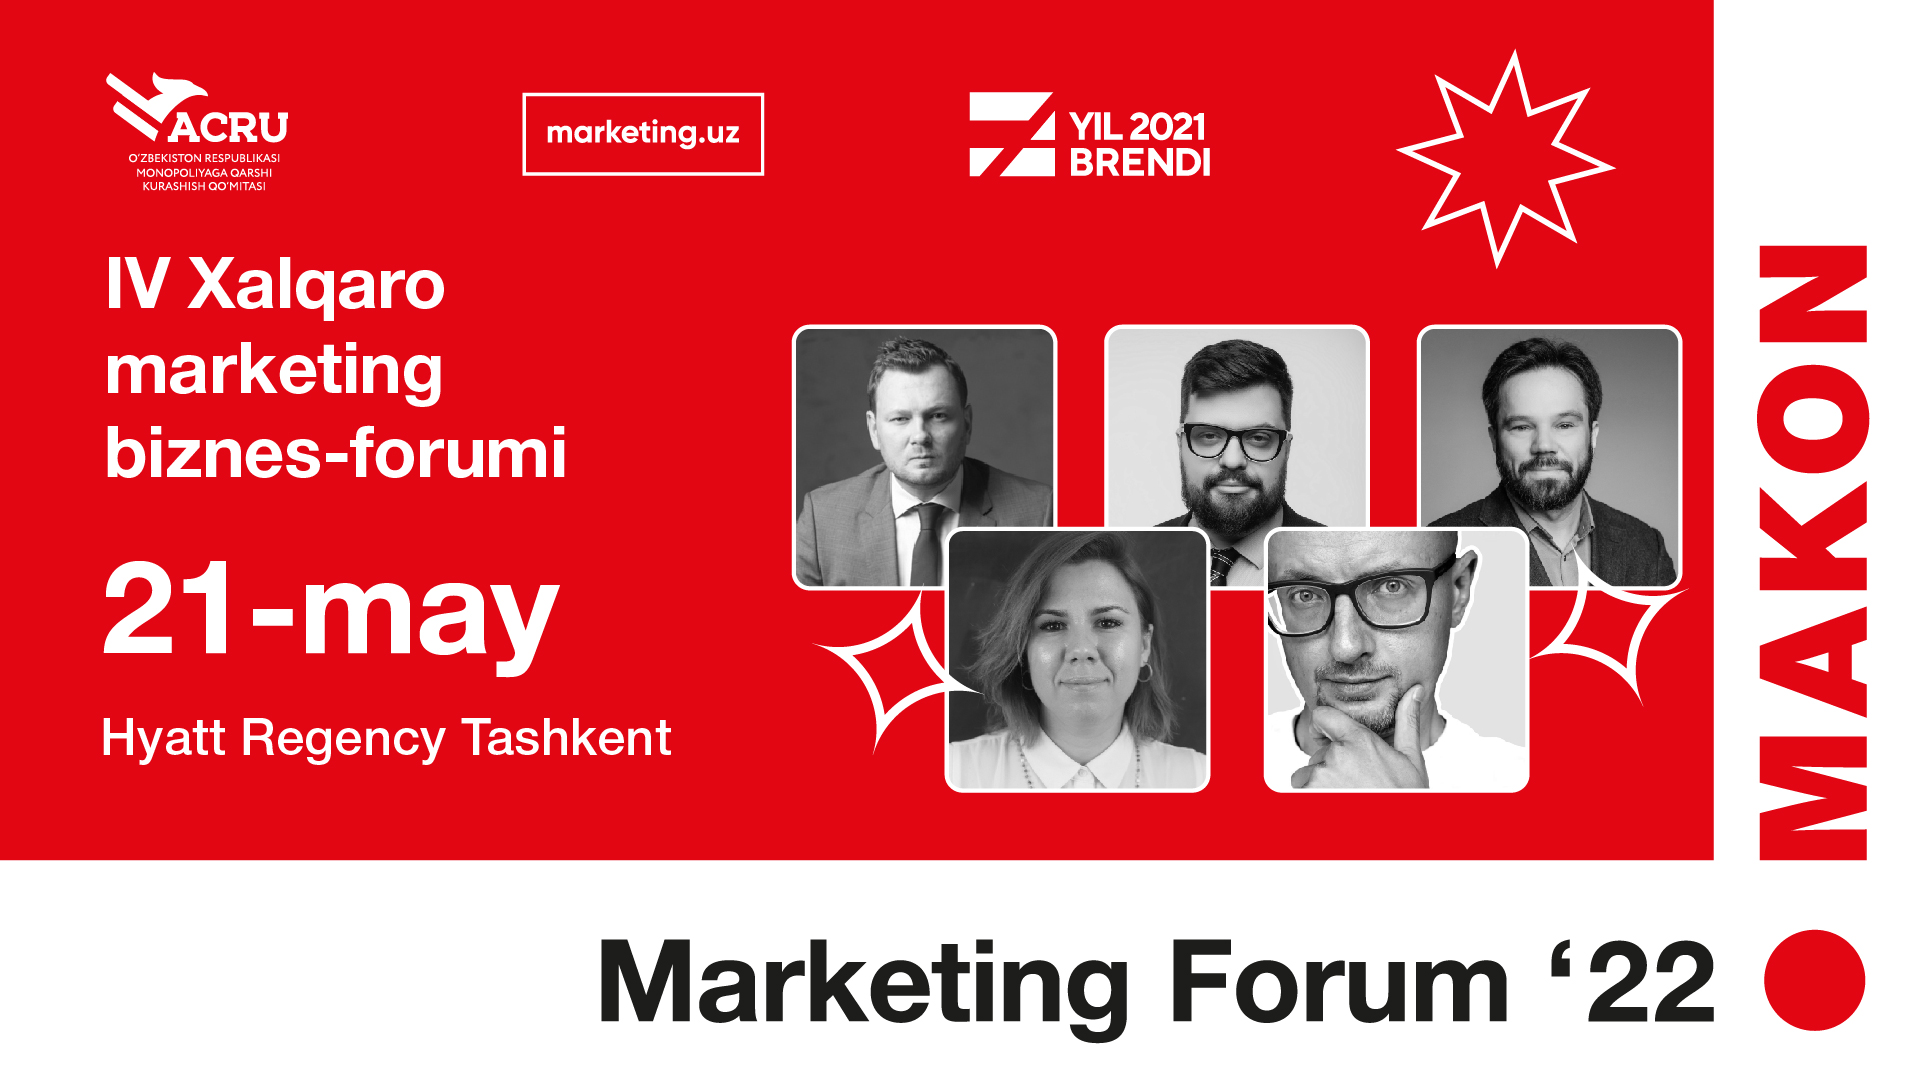 Тошкентда «Makon Marketing Forum 2022» тўртинчи халқаро маркетинг бизнес-форуми бўлиб ўтади